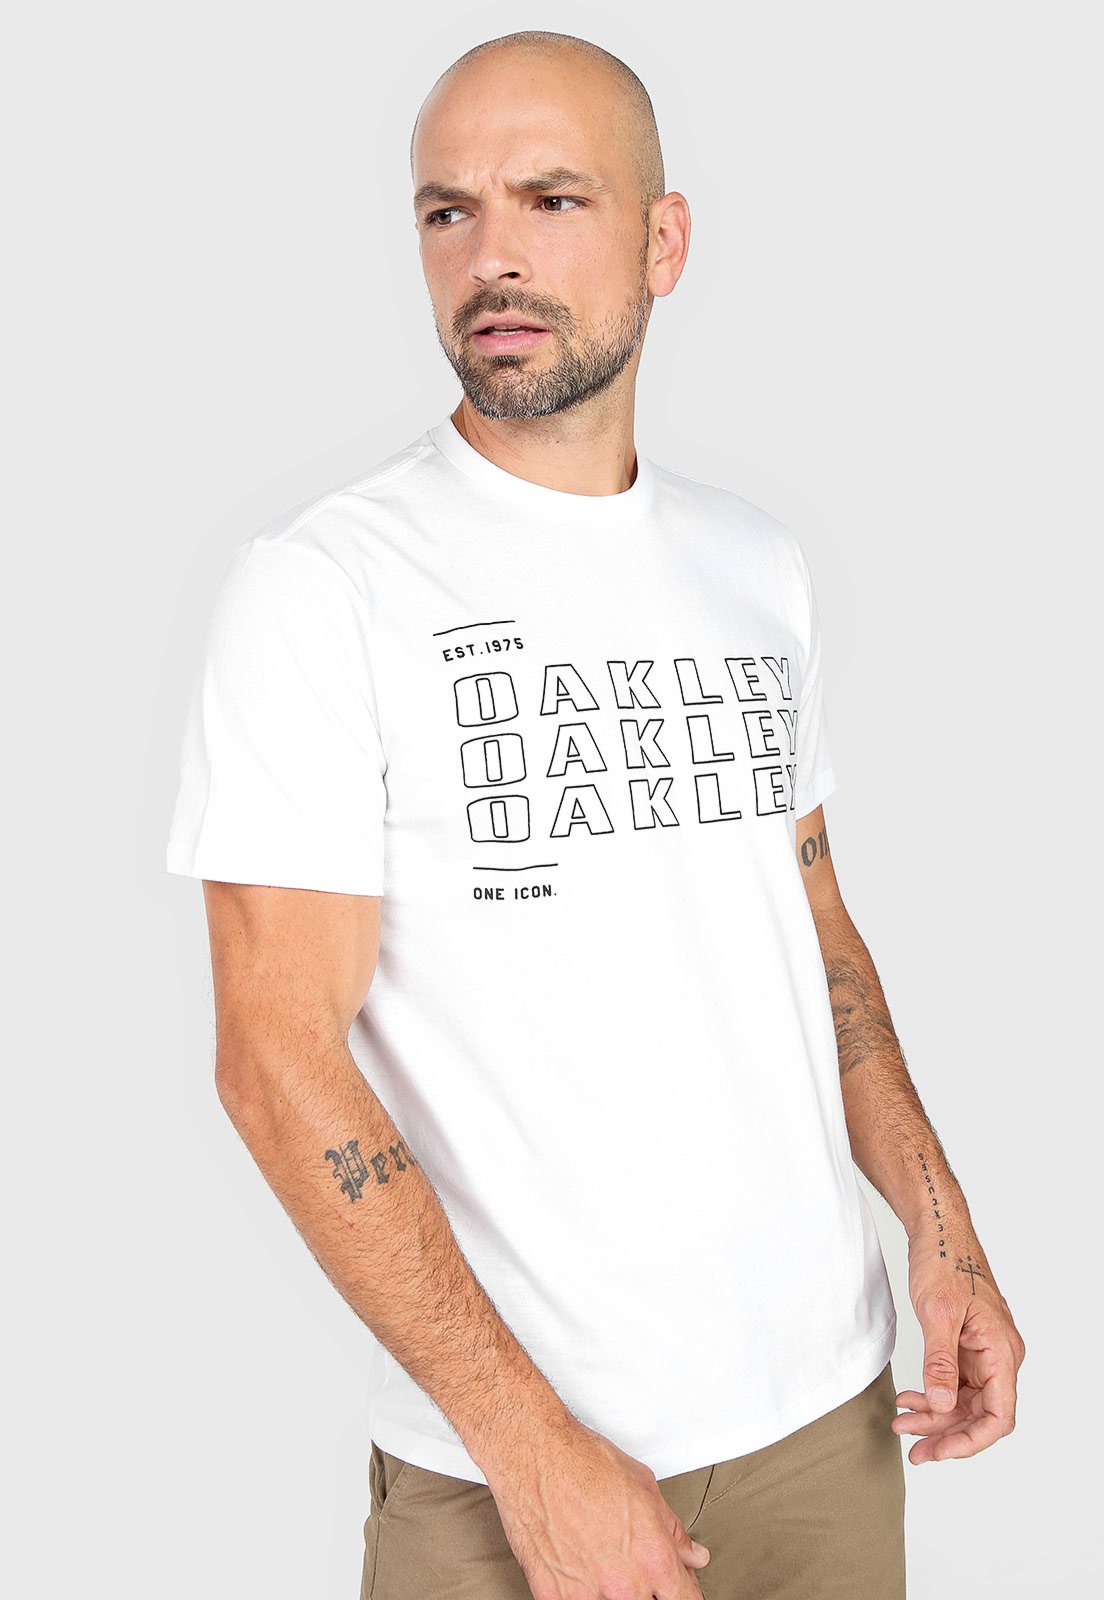 Camiseta Oakley Bark New Branca 